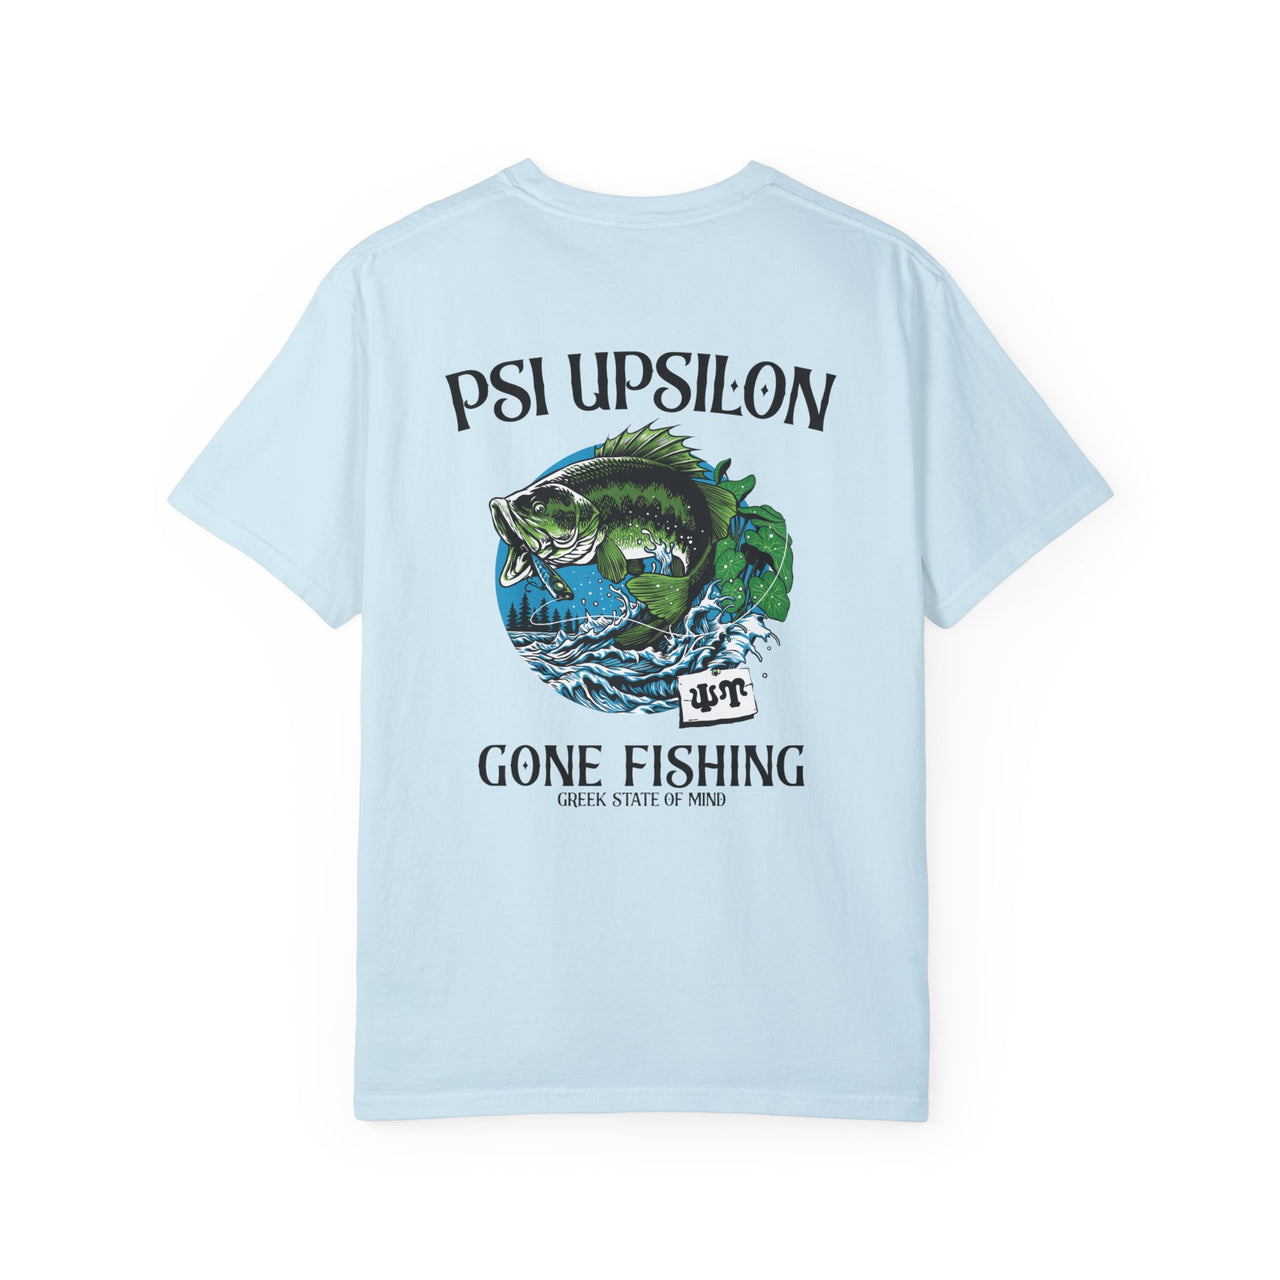 Psi Upsilon Graphic T-Shirt | Gone Fishing